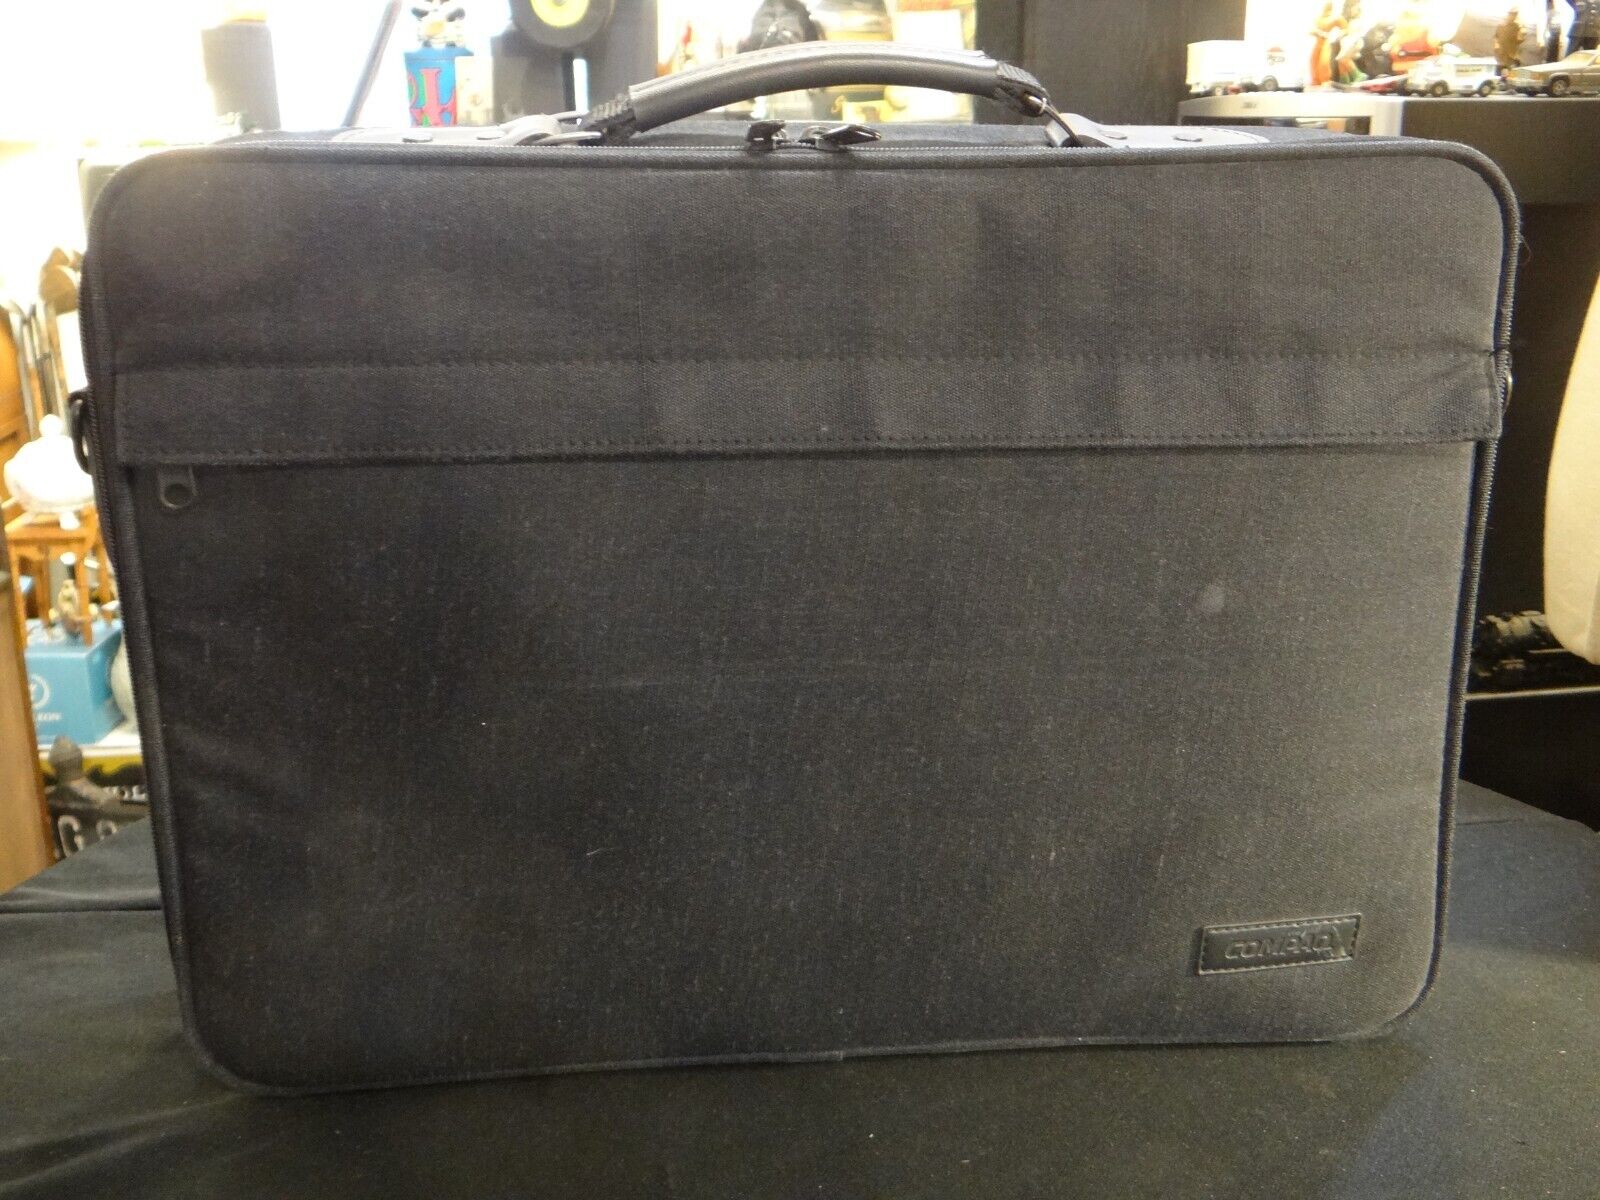 Compaq Laptop Bag Carry Case Vintage 17x12 Black 1995 Handle Pockets Adjustable